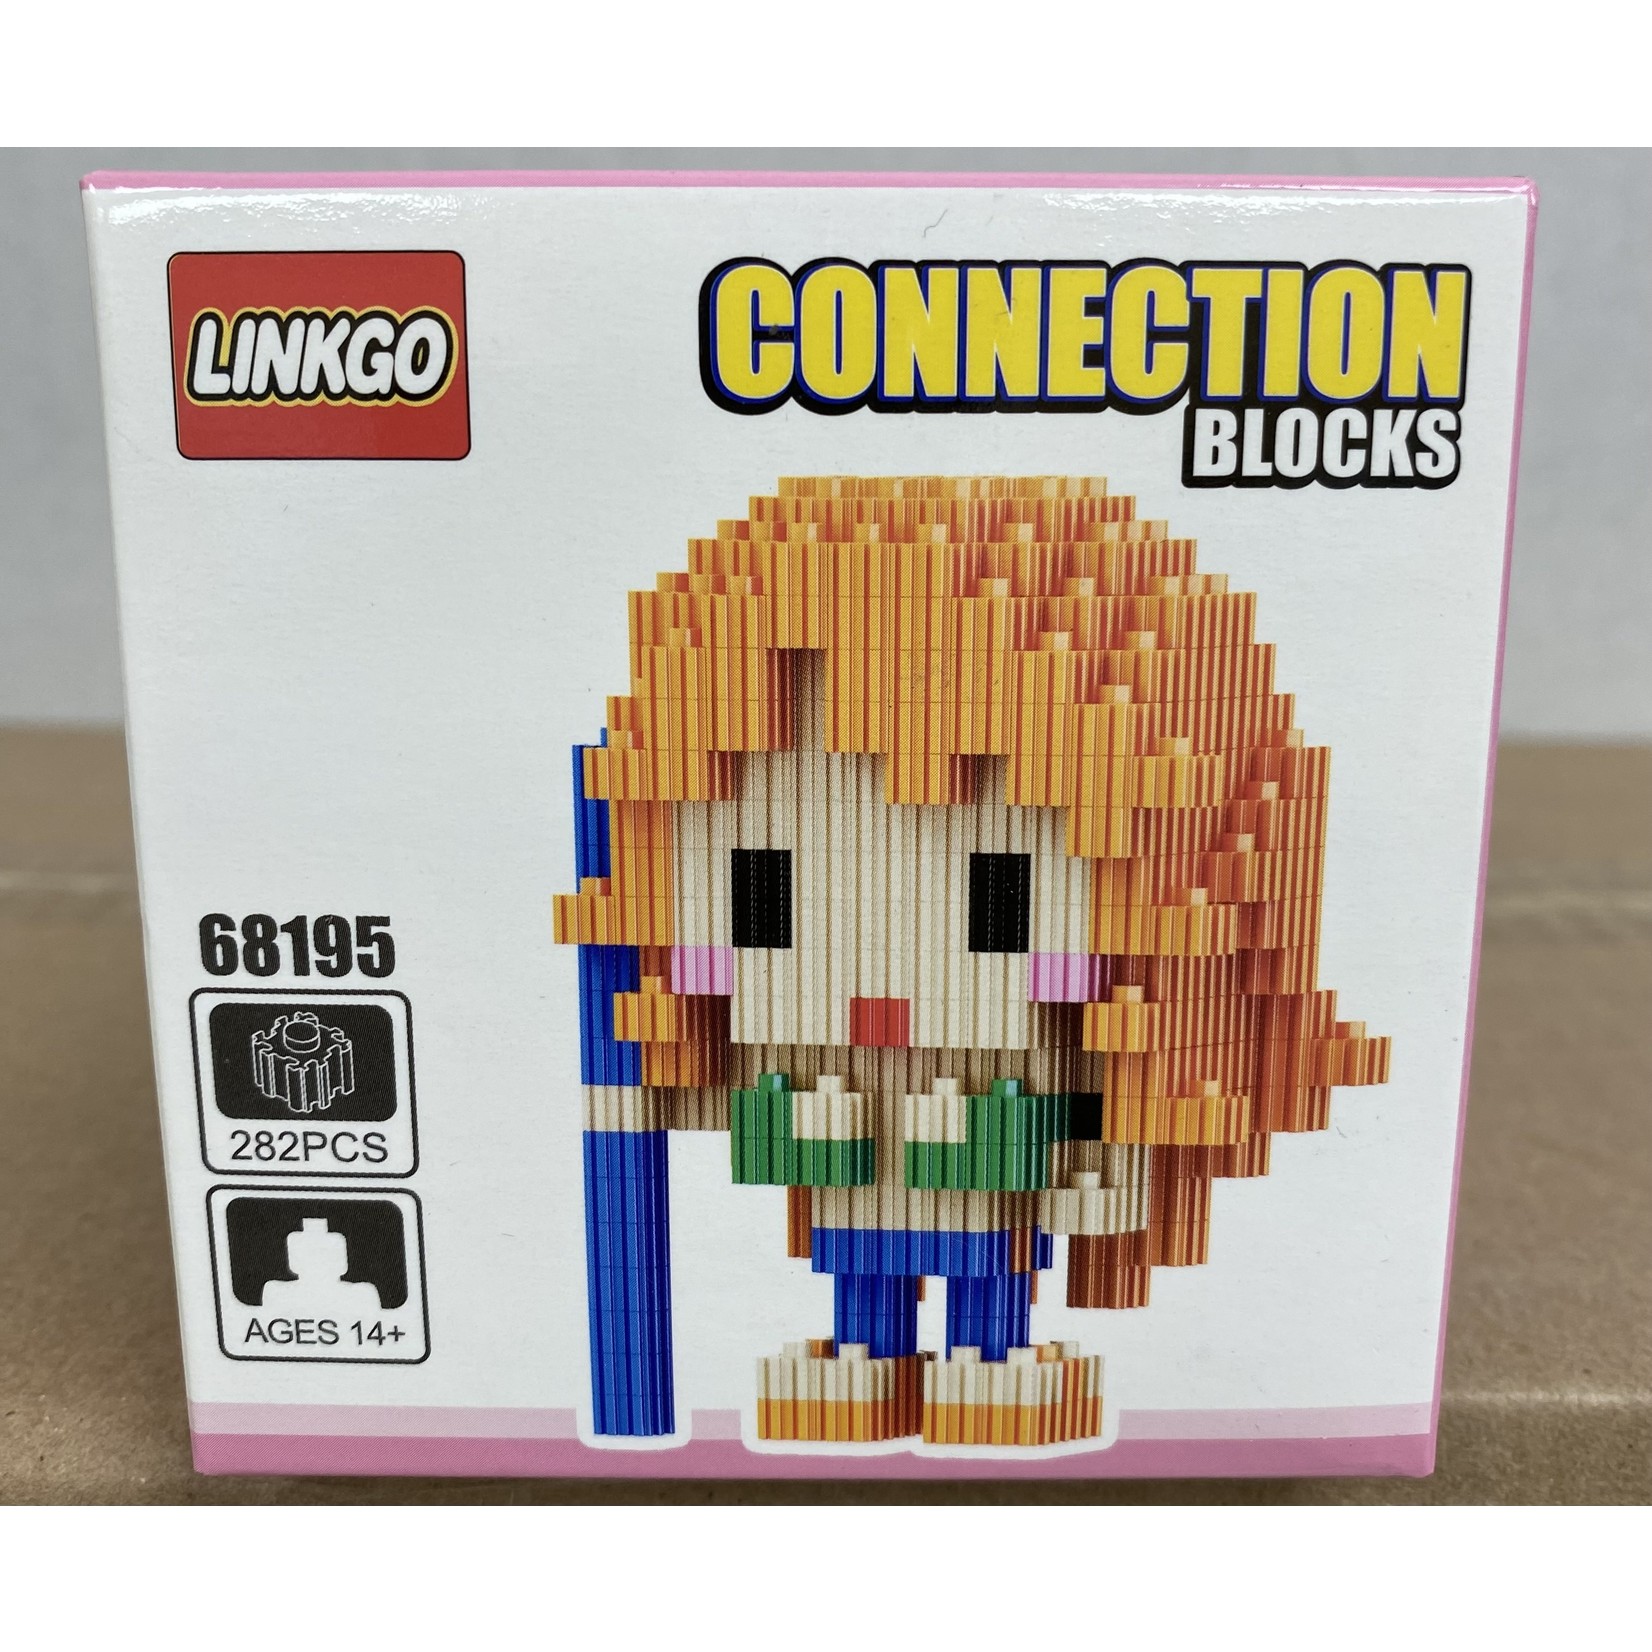 Linkgo - Connection Blocks - 68195